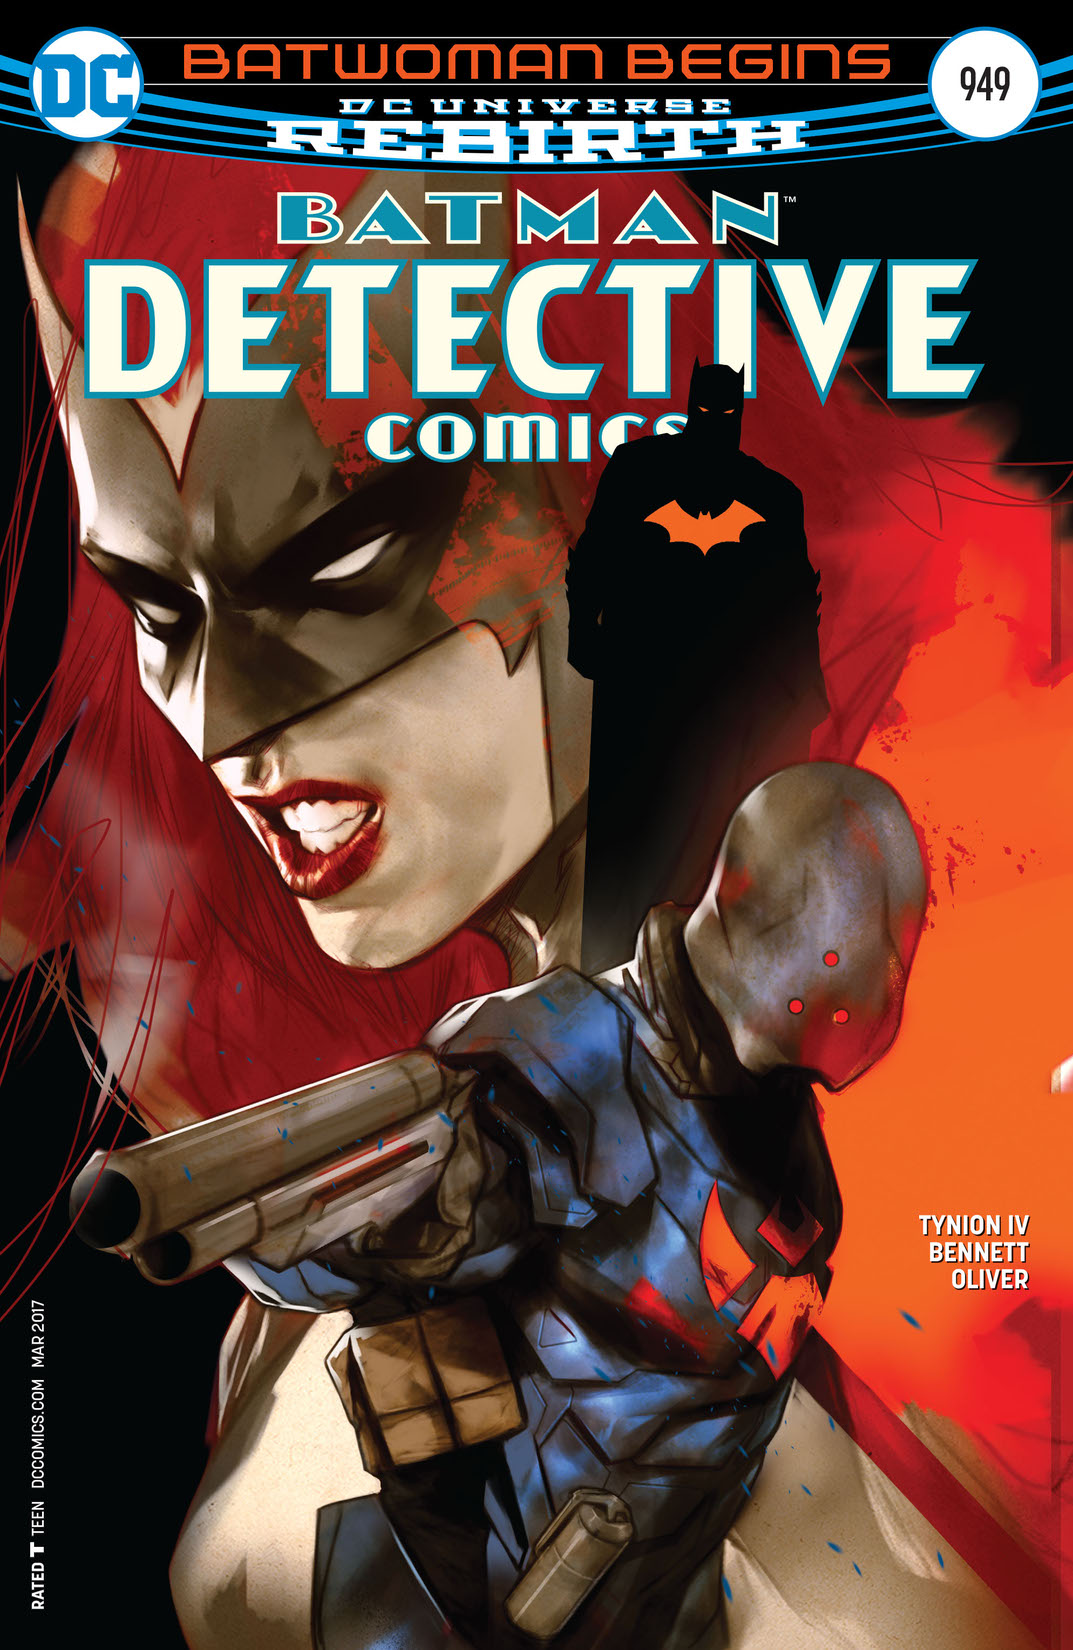 Detective Comics (2016-) #949 preview images